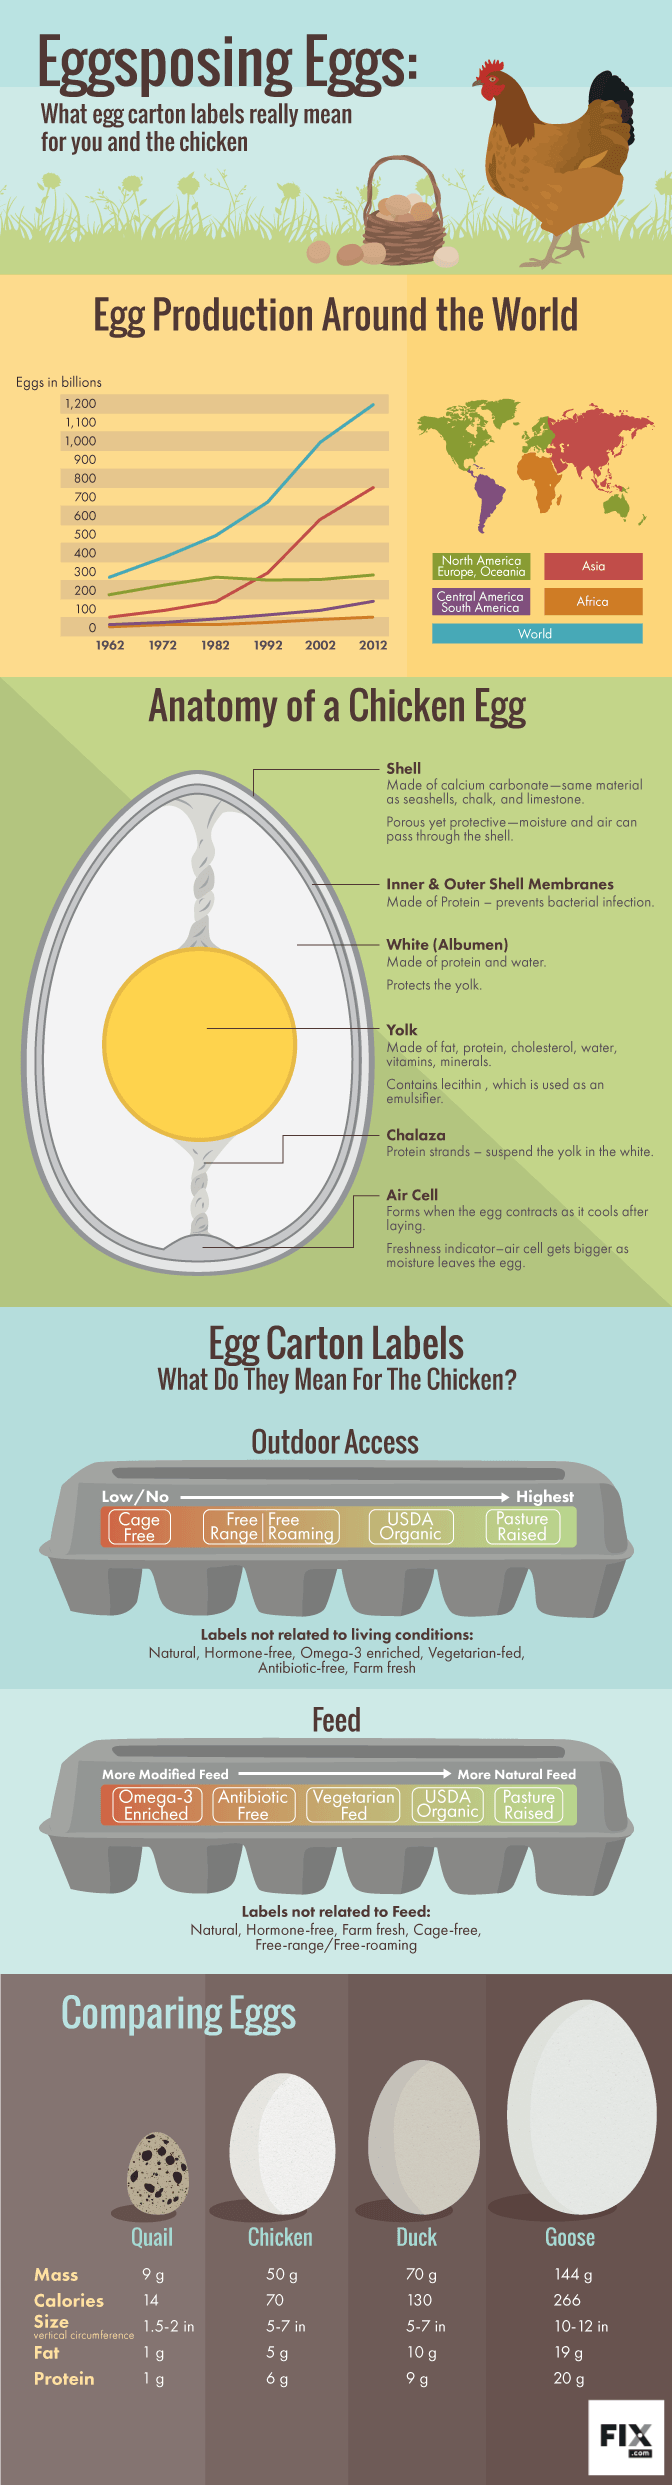 eggsposing-eggs-embed-large